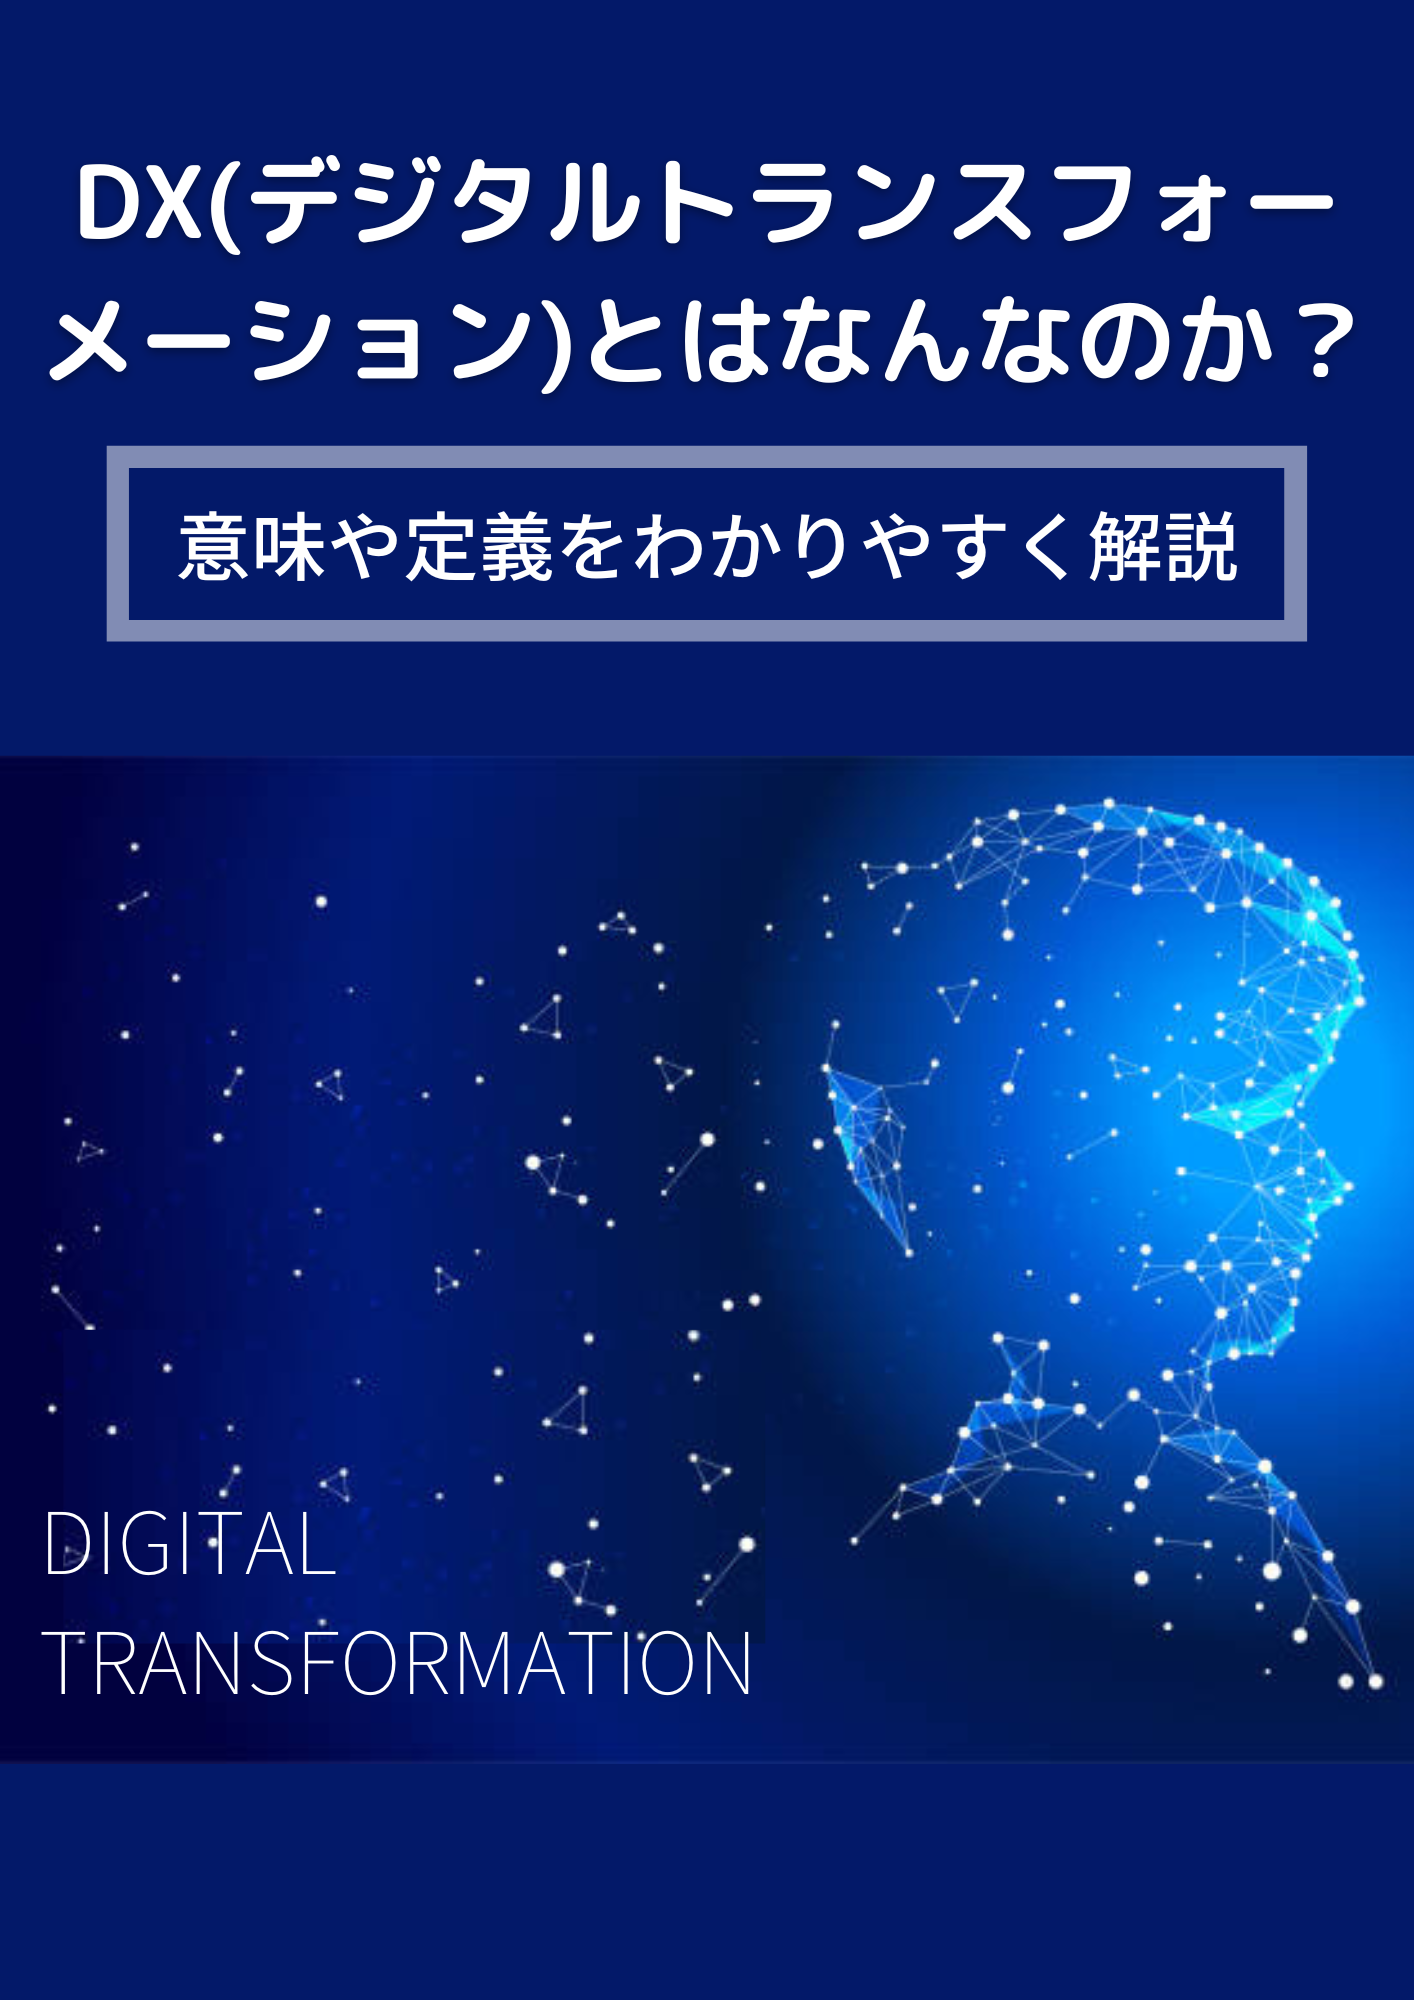 DX（デジタルトランスフォーメーション）とはなんなのか？